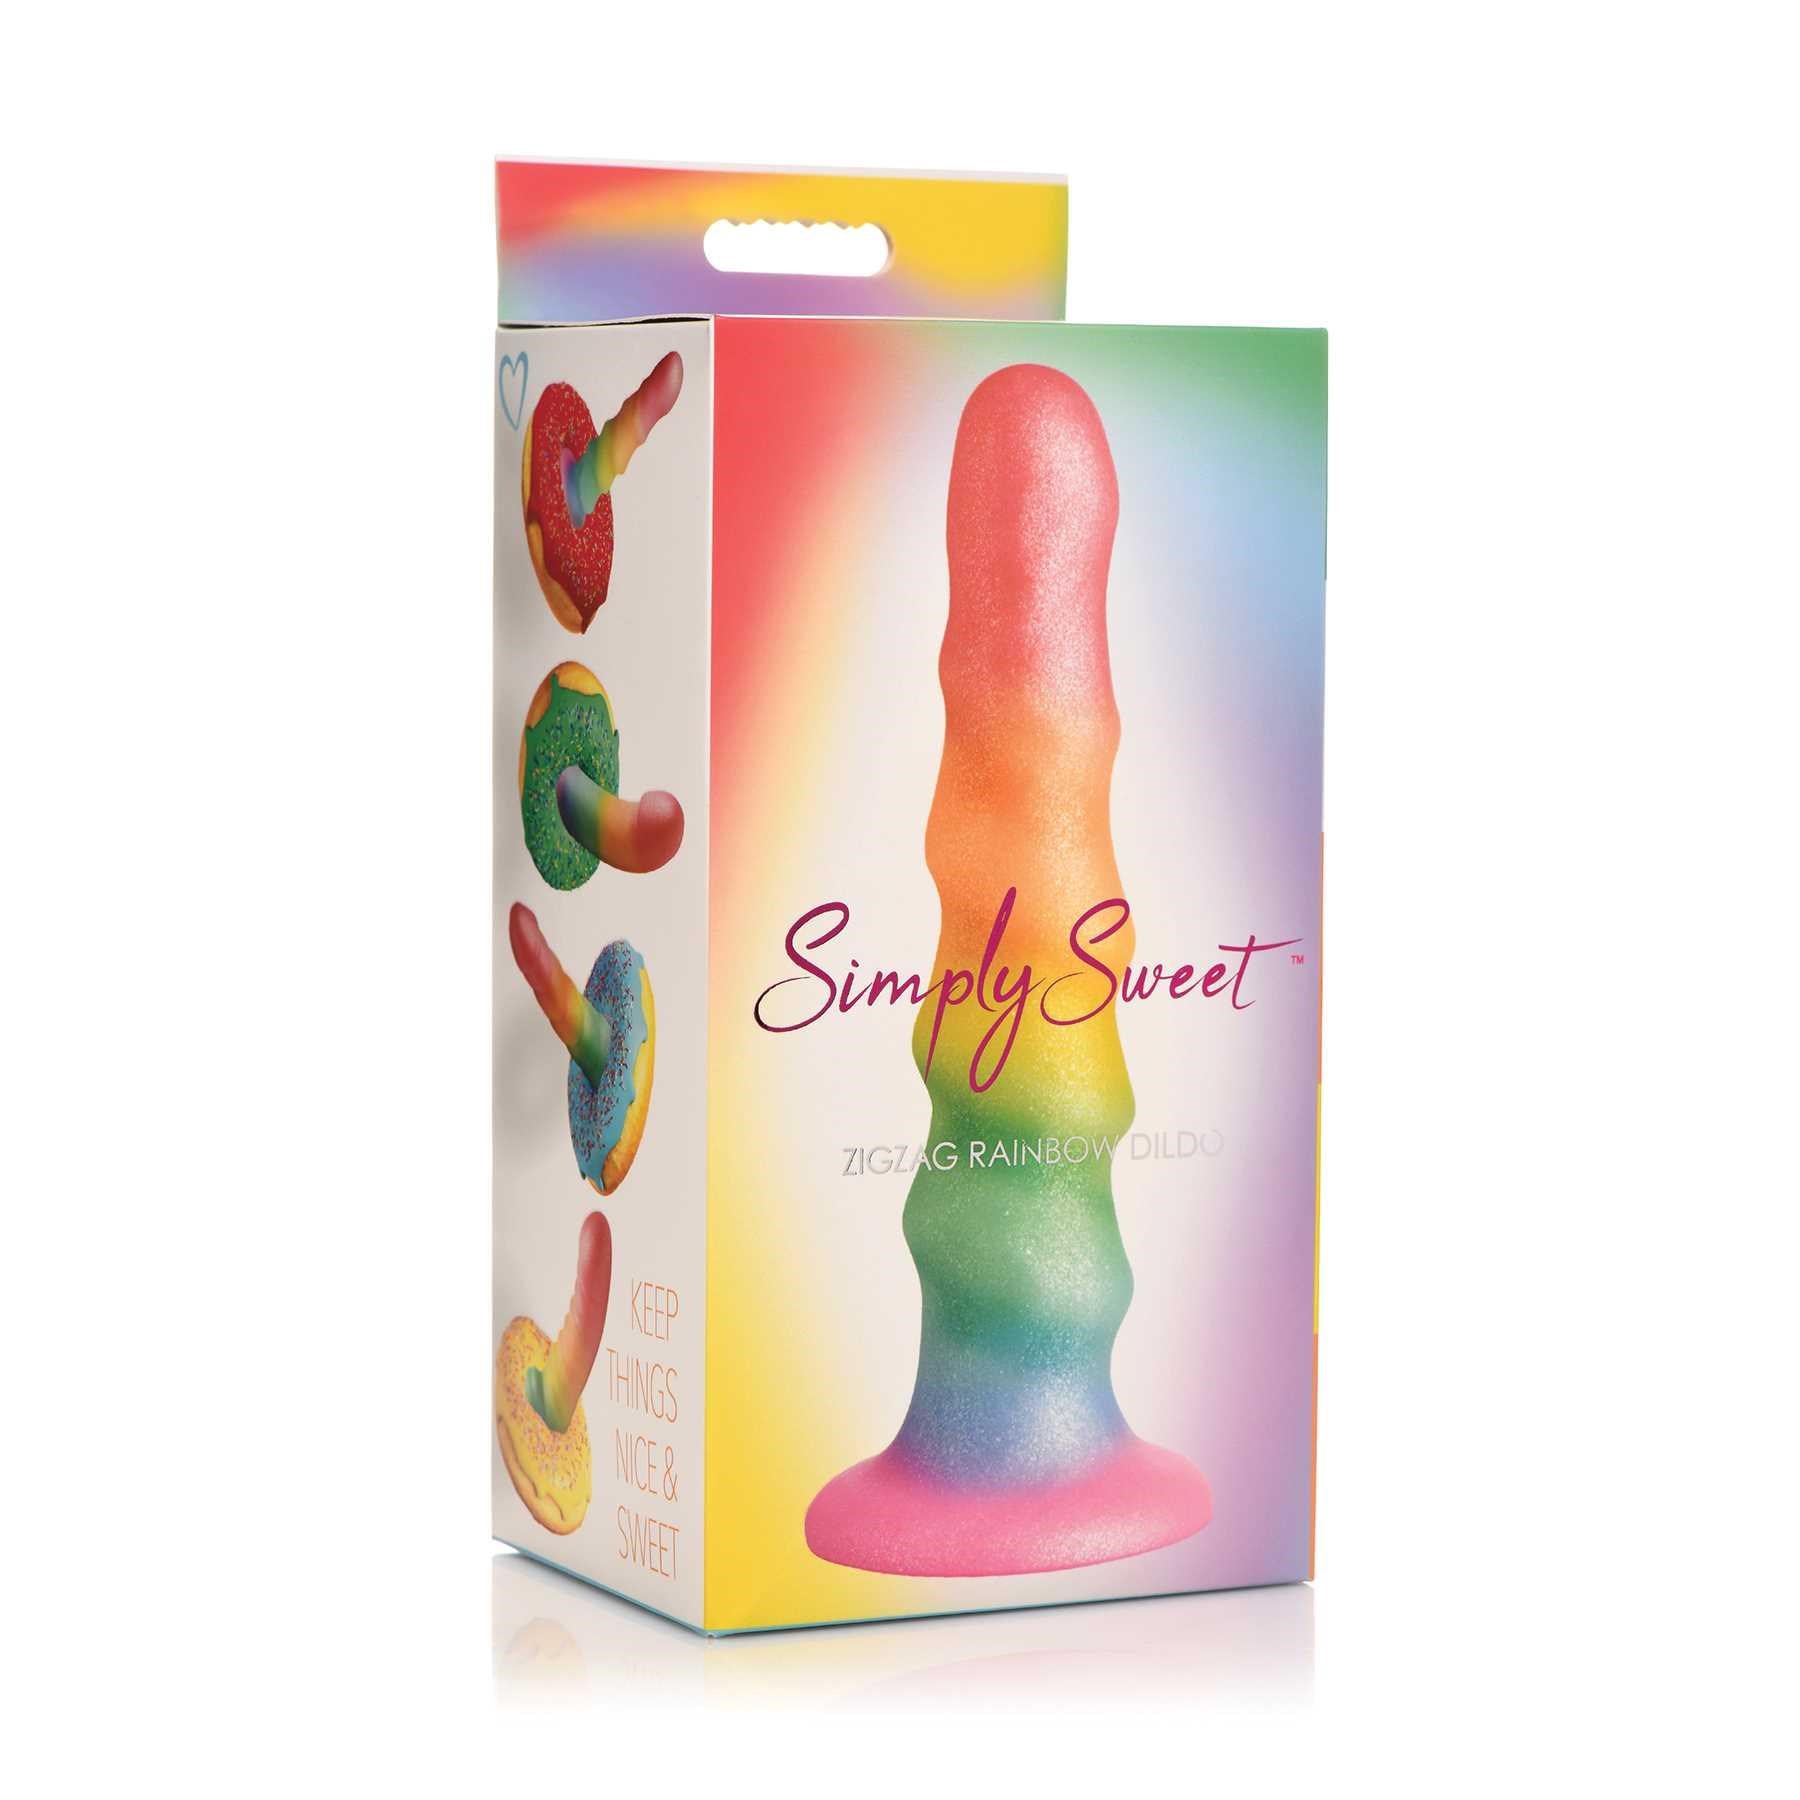 SIMPLY SWEET ZIGZAG RAINBOW DILDO packaging